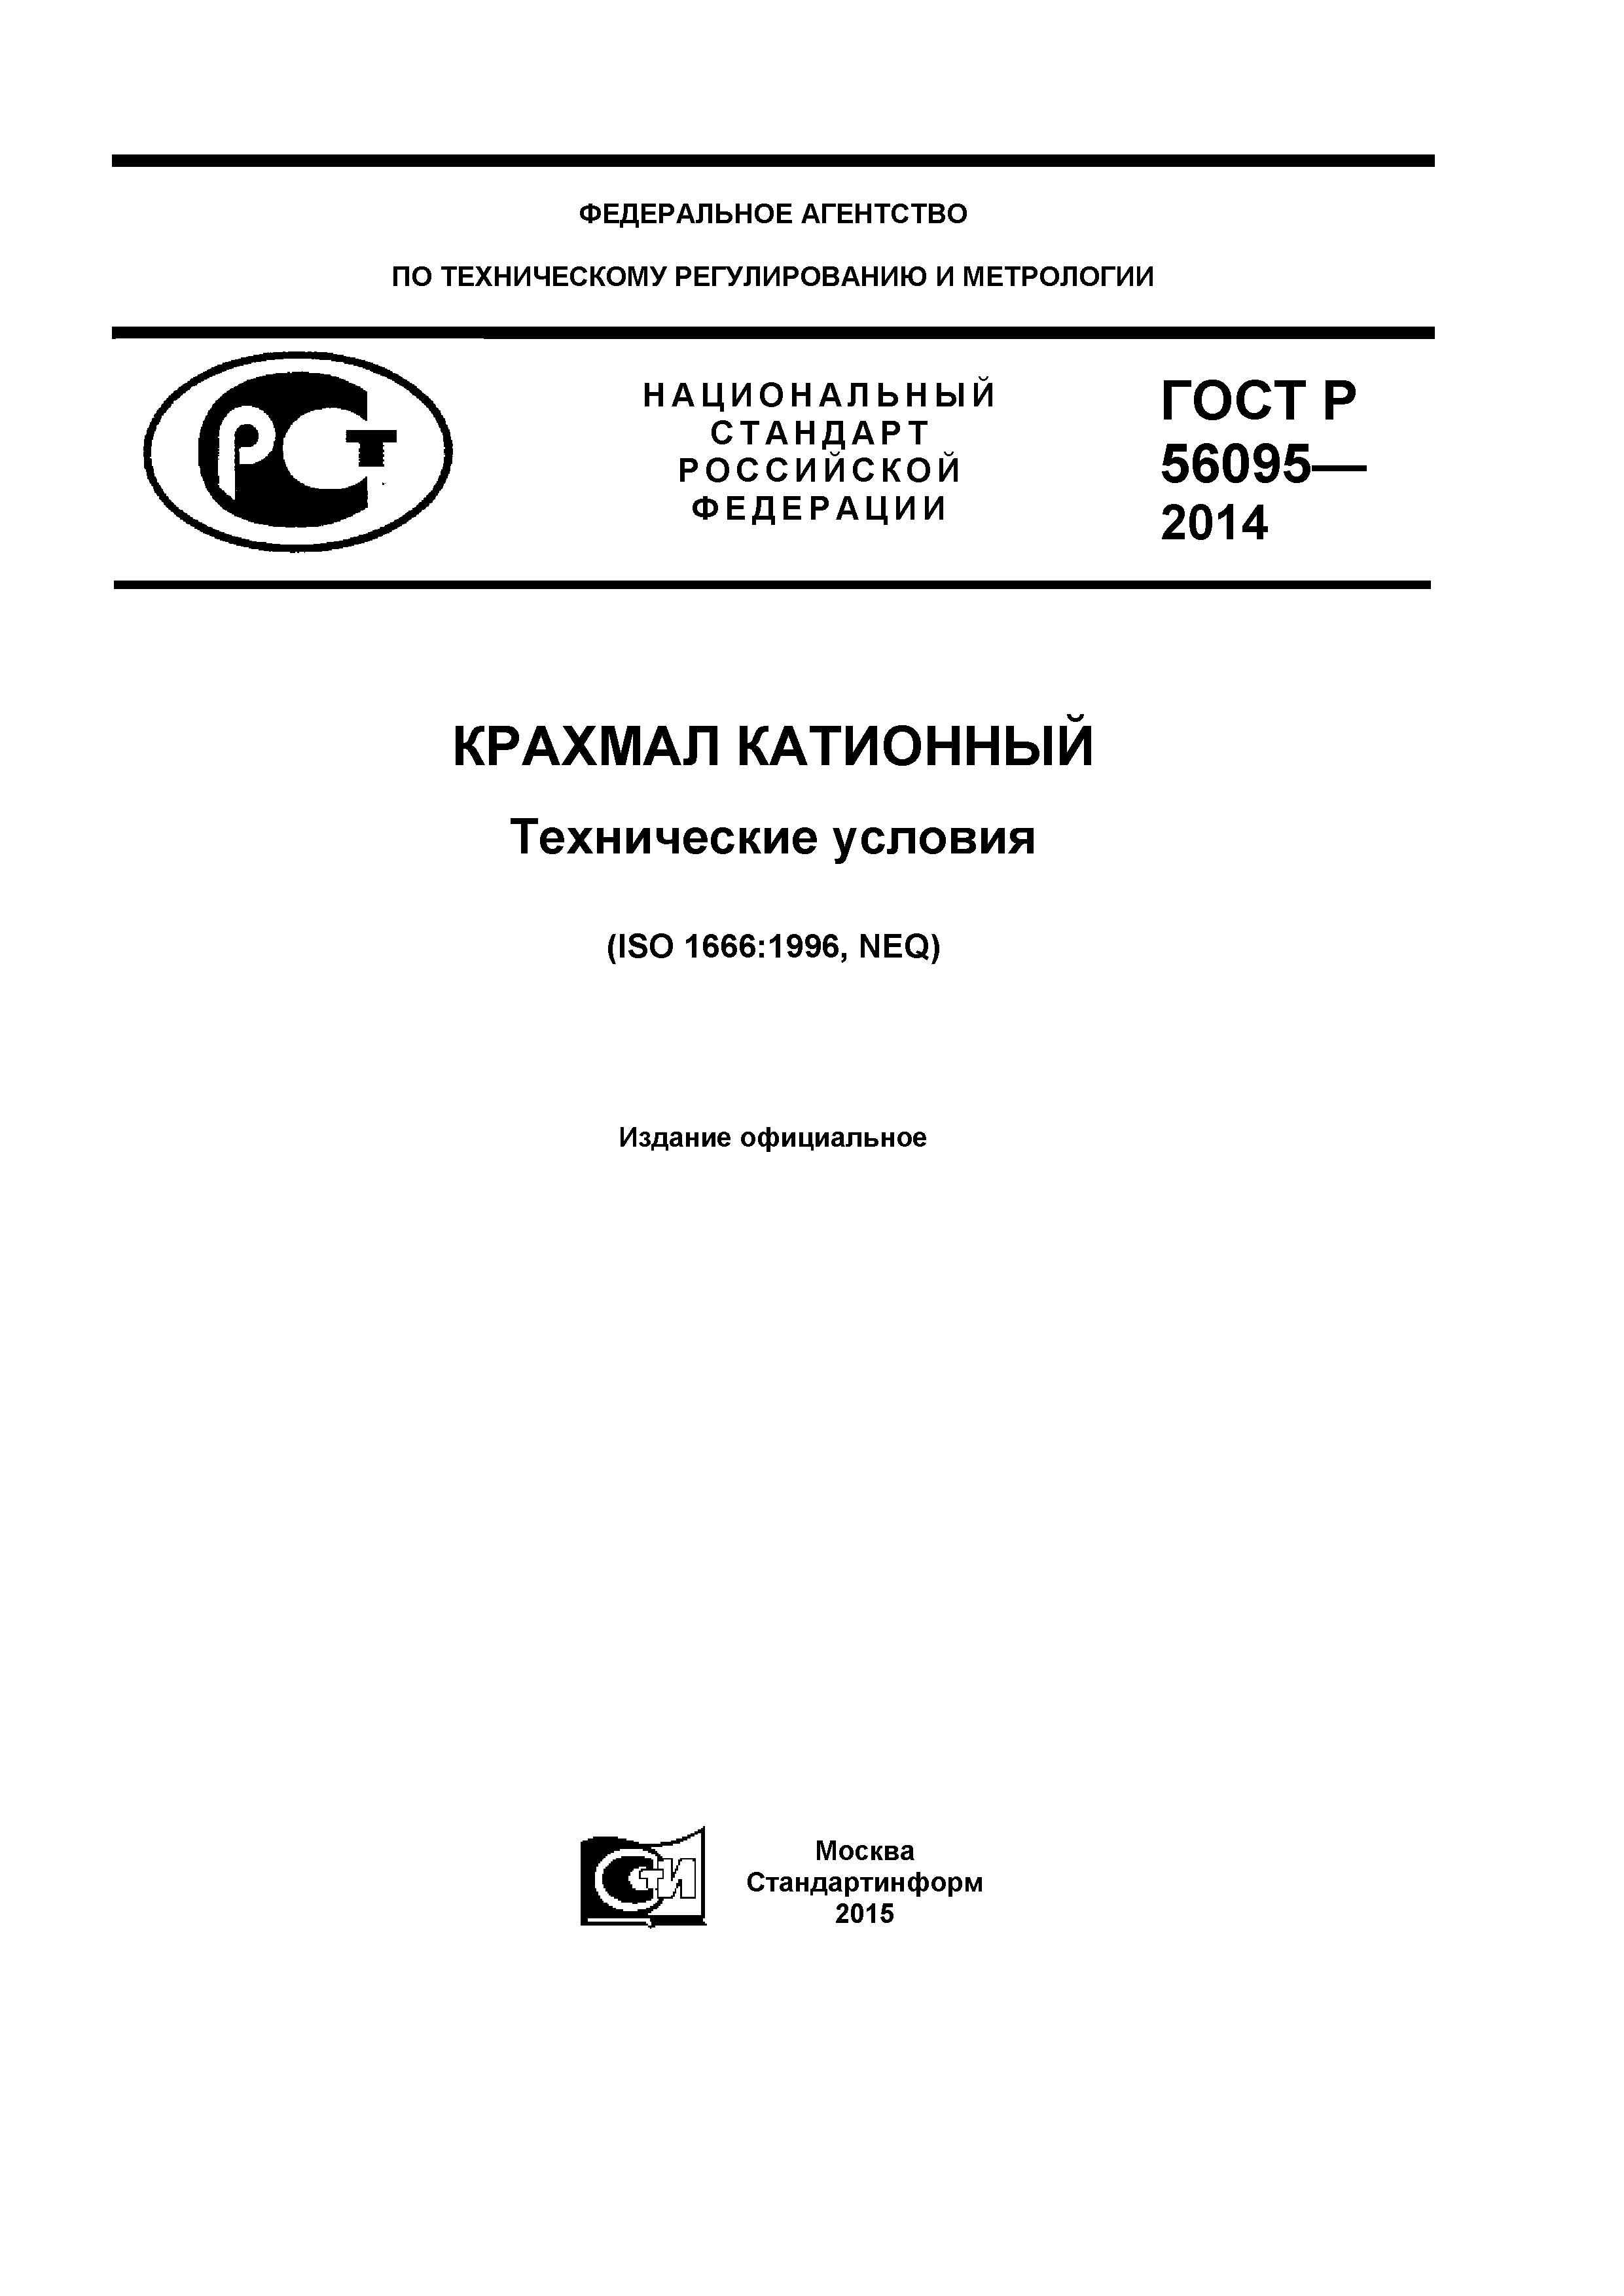 ГОСТ Р 56095-2014